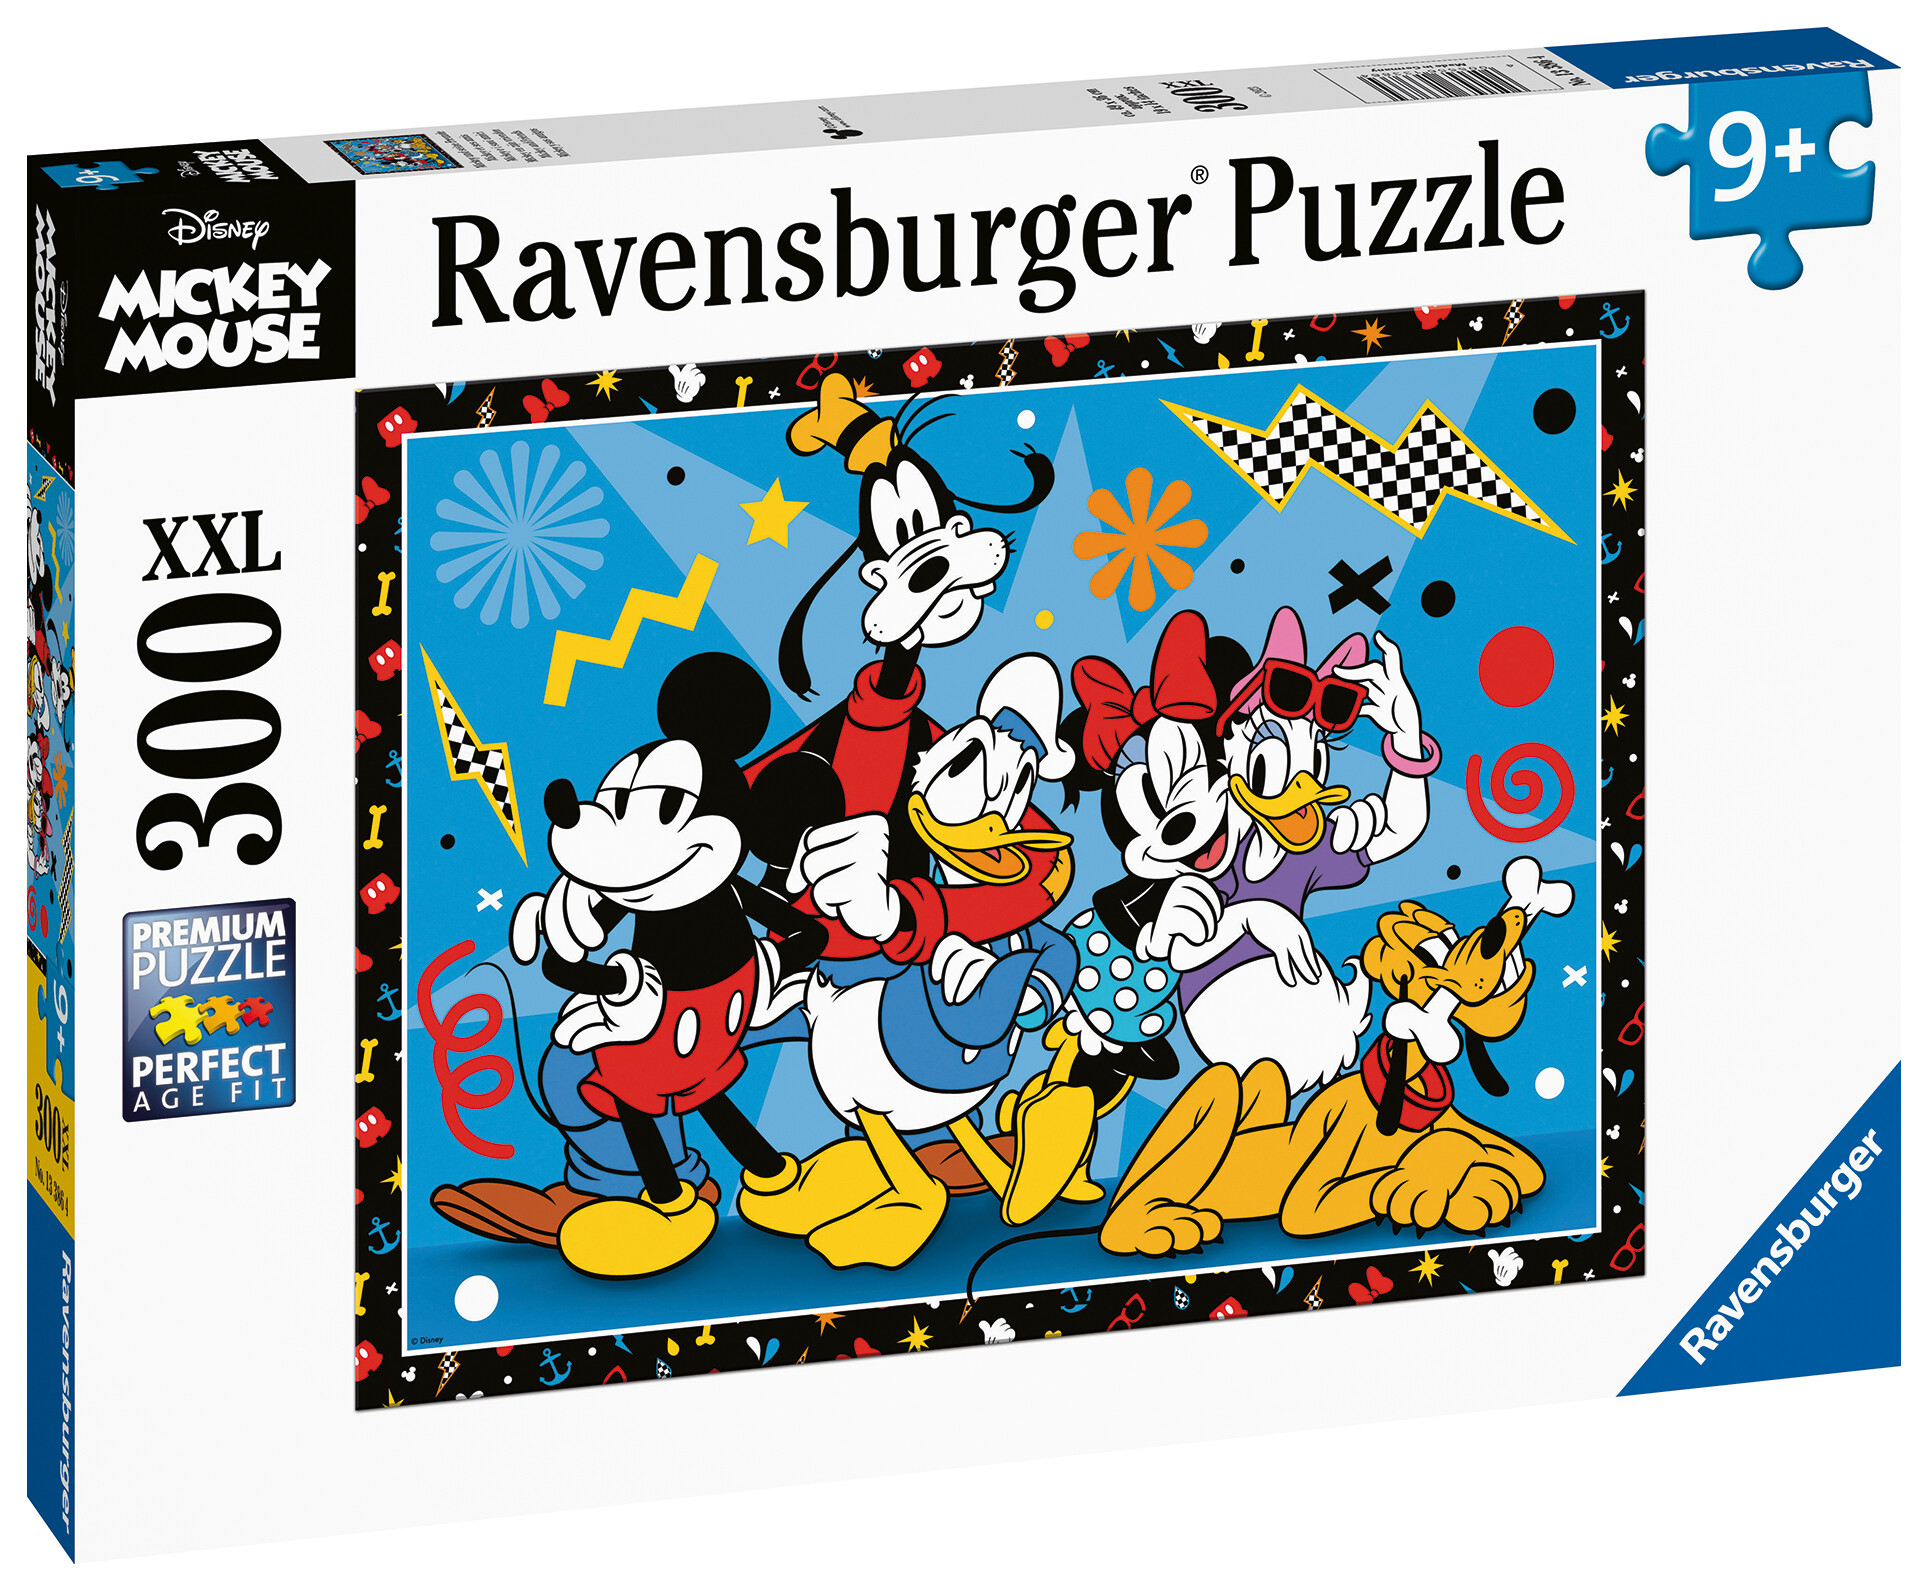 Ravensburger - puzzle mickey & friends, 300 pezzi xxl, età raccomandata 9+ anni - RAVENSBURGER, Mickey Mouse